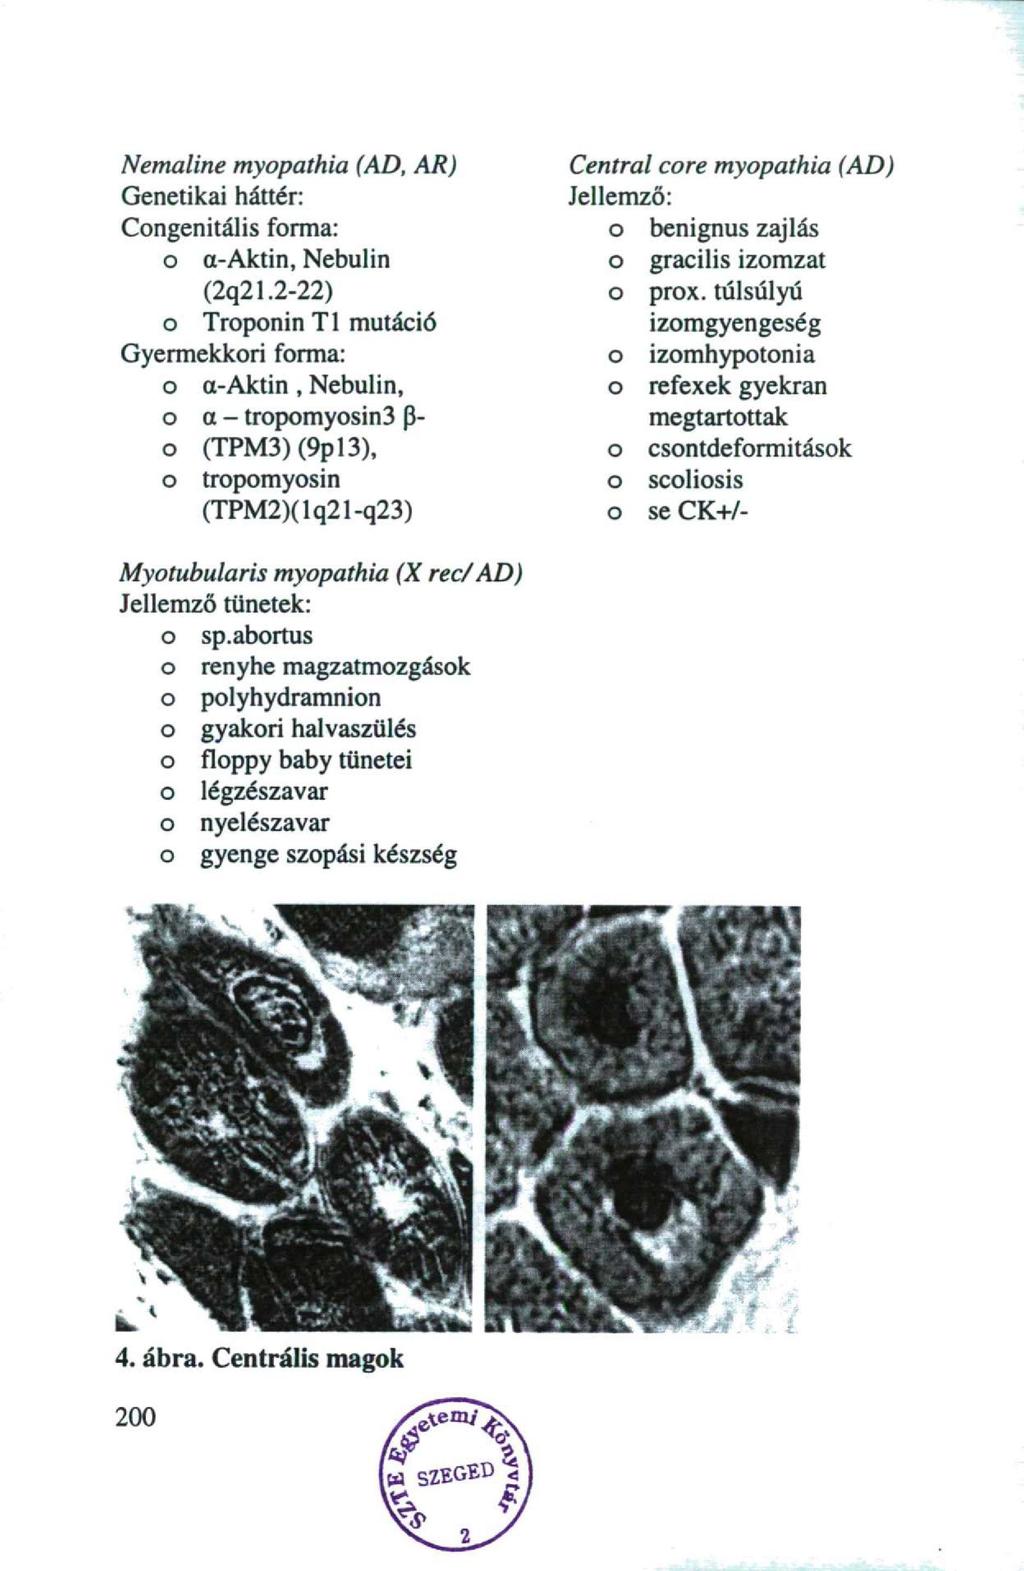 Nemaline mypathia (AD, AR) Genetikai háttér: Cngenitális frma: a-aktin, Nebulin (2q21.